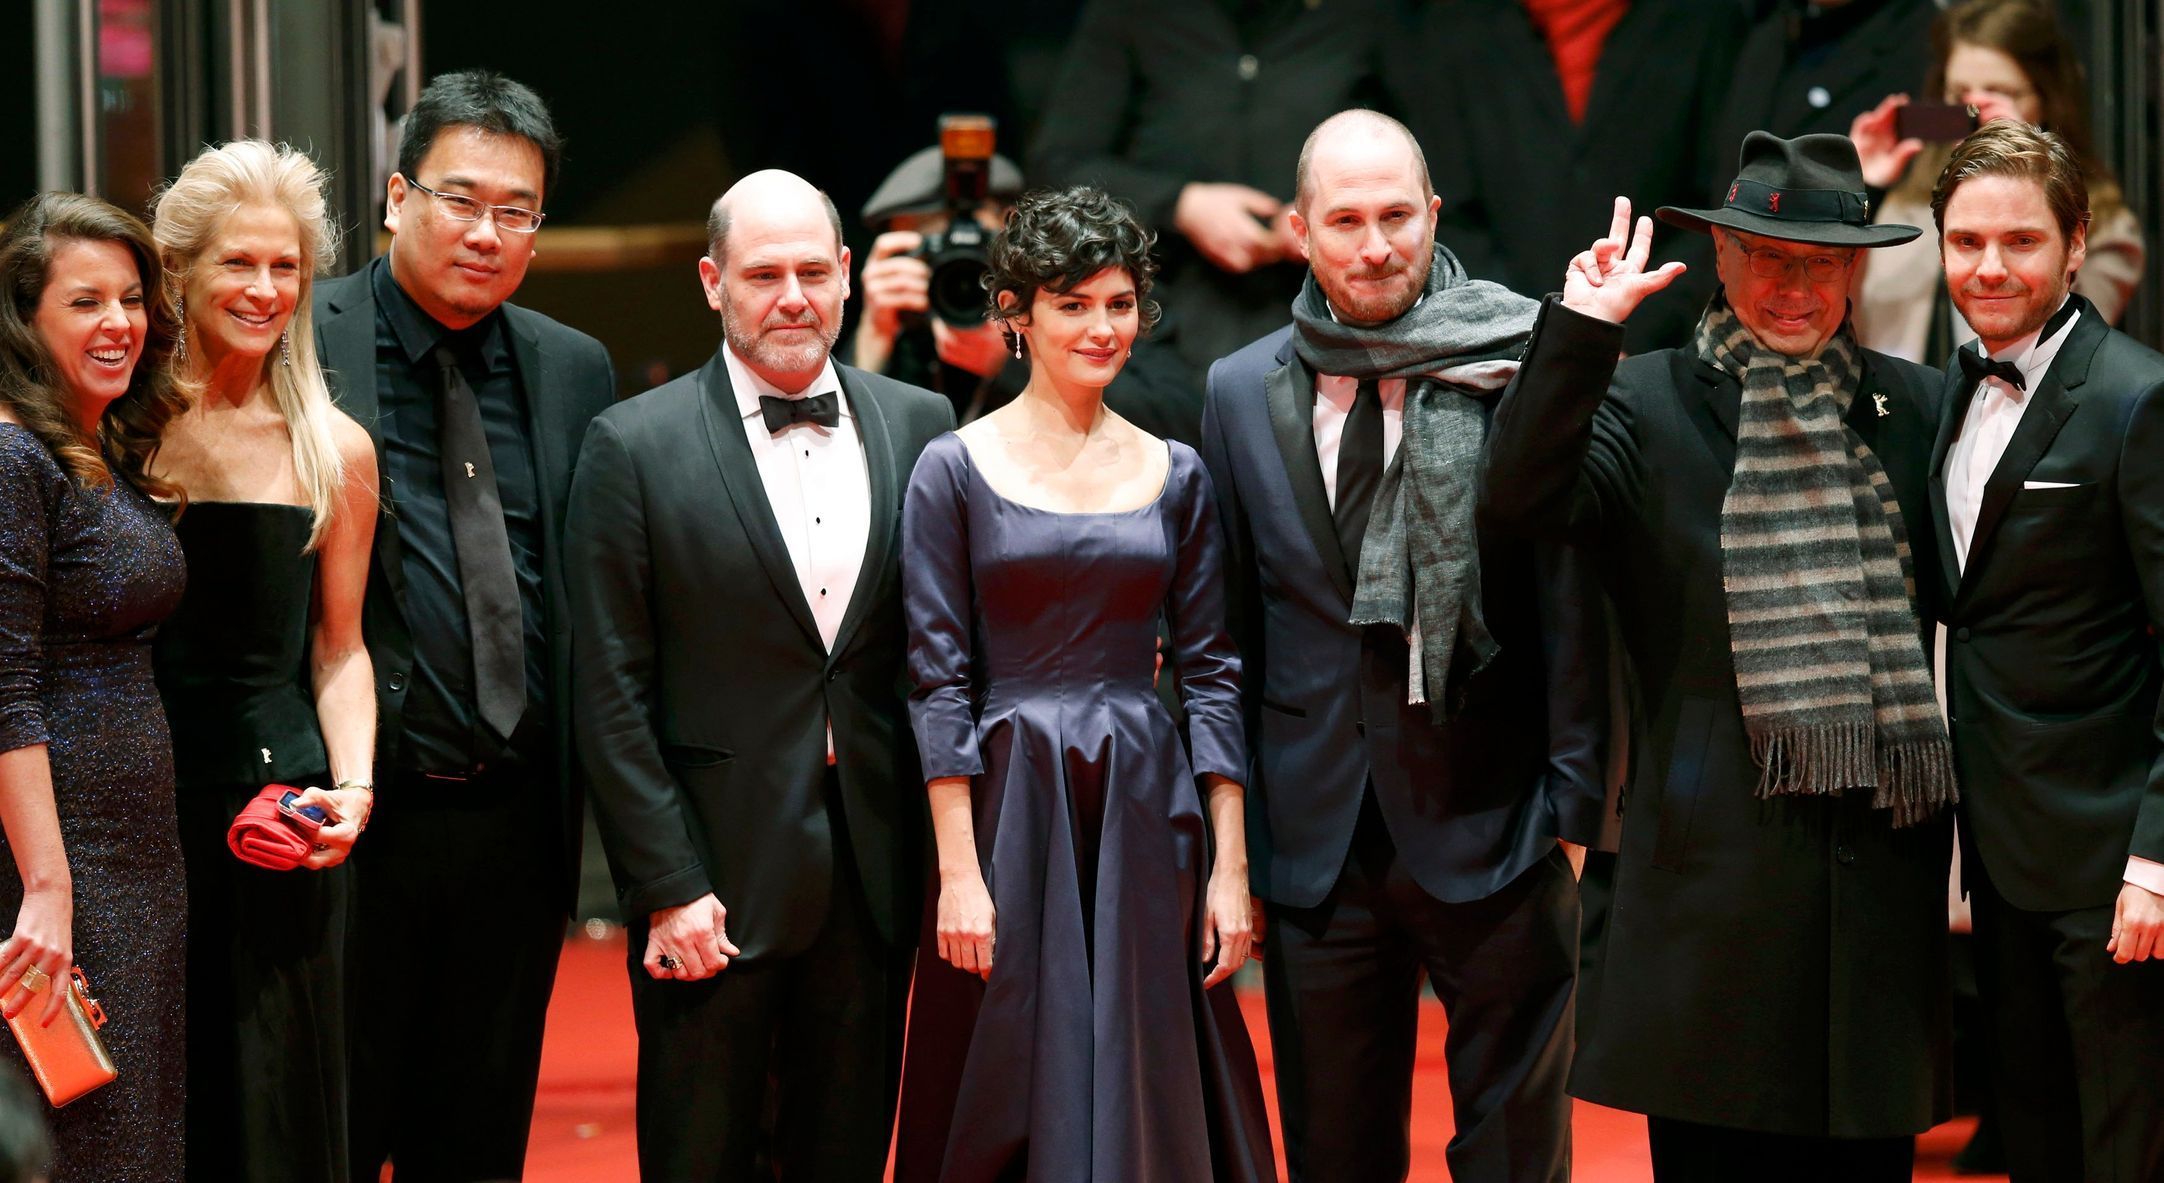 Members of the international jury and Berlinale Director Kosslick arrive for screening during opening gala of 65th Berlinale International Film Festival in Berlin